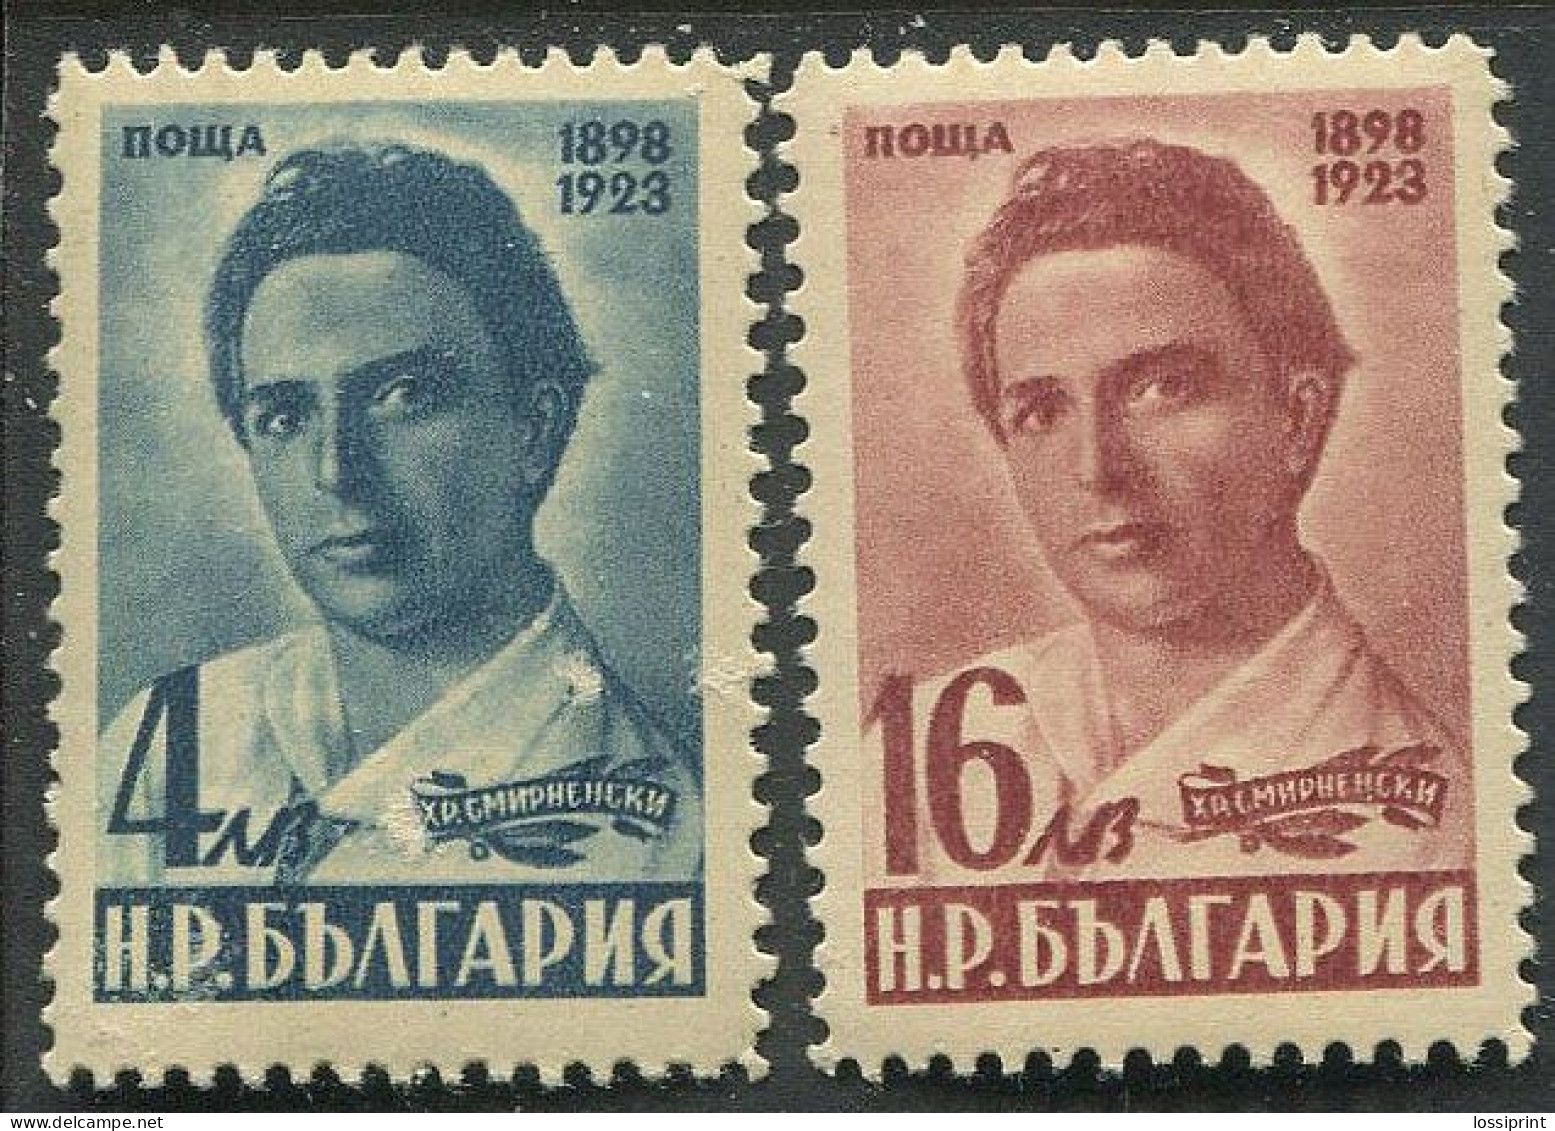 Bulgaria:Unused Stamps Serie H.R.Smirnenski, 1948, MNH - Unused Stamps